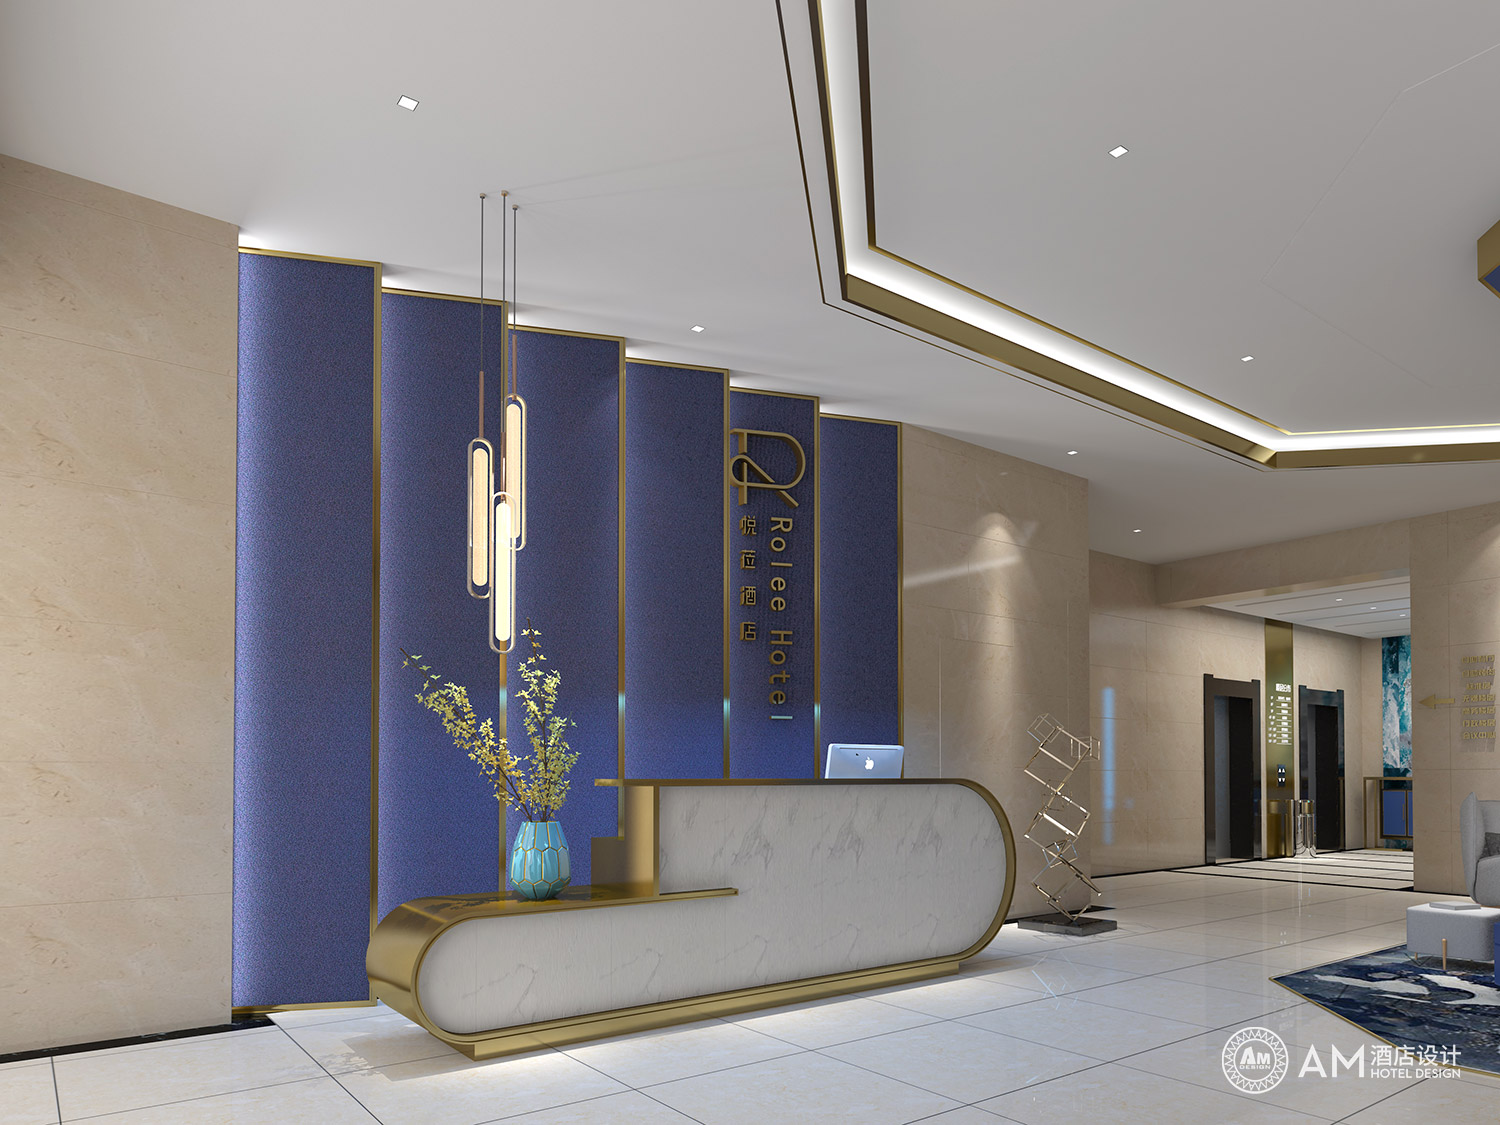 AM DESIGN | Front desk design of Xi'an Yuelai Hotel